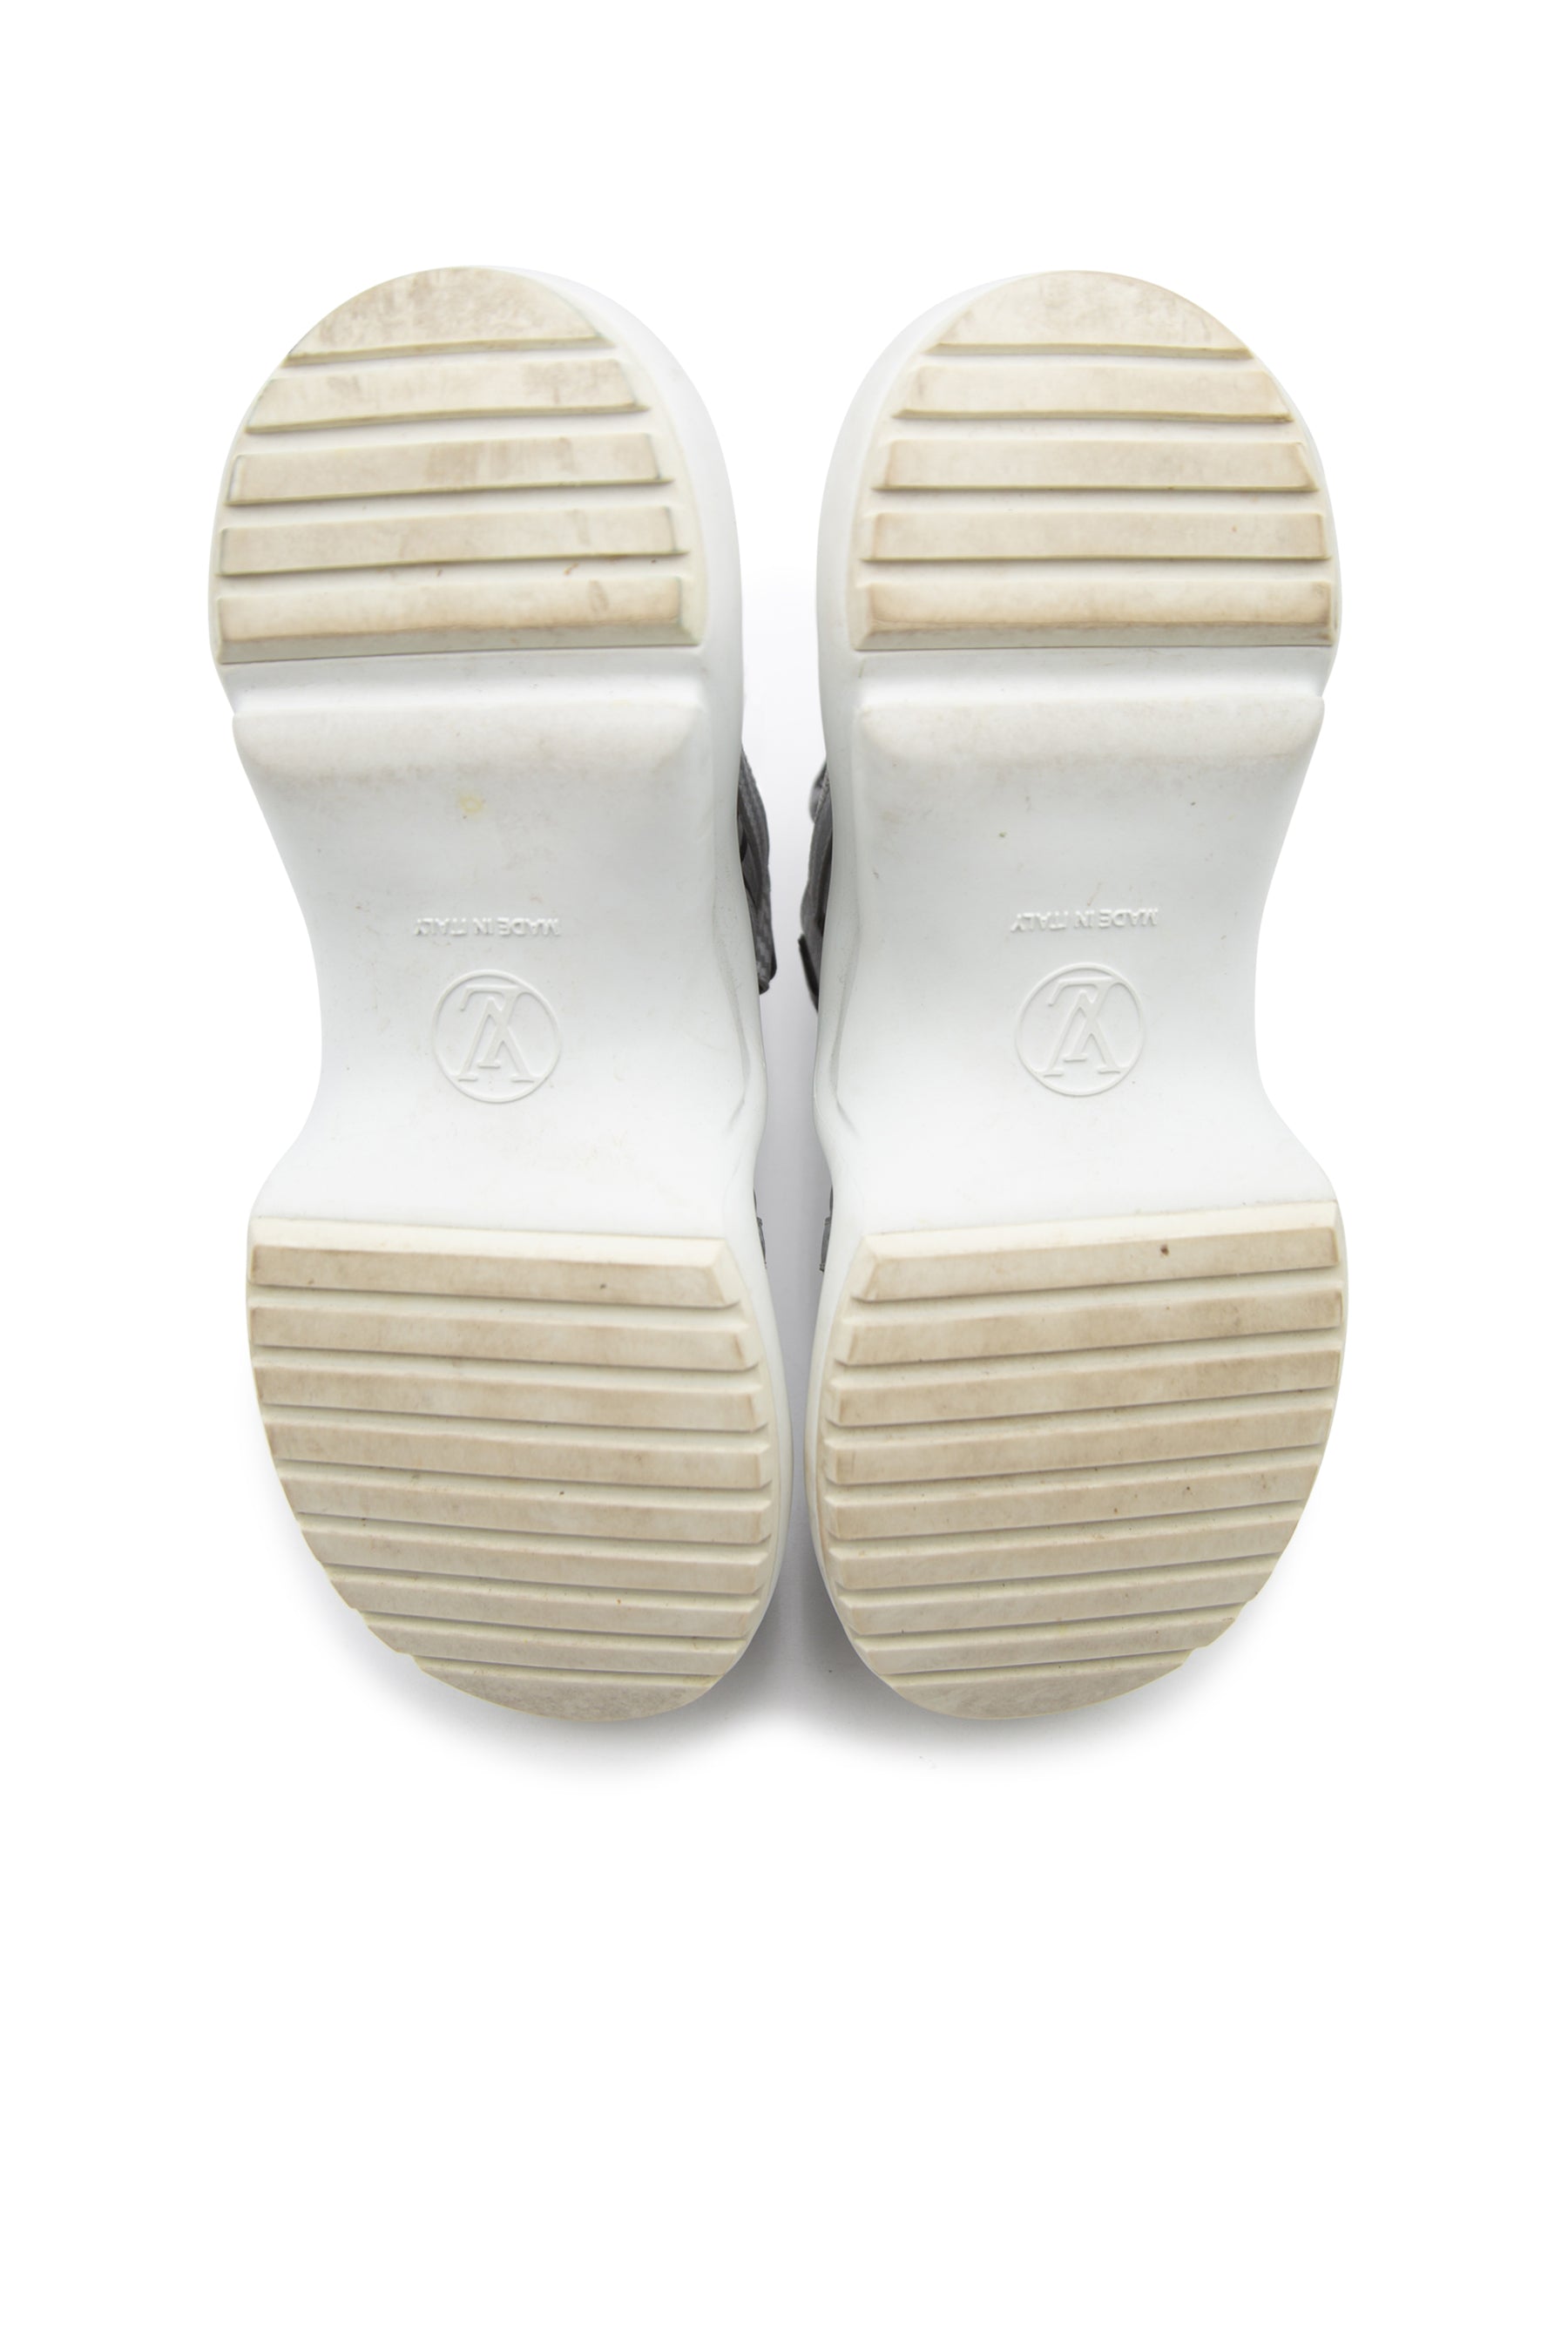 Louis Vuitton Archlight Chunky Sneaker | (Est. Retail